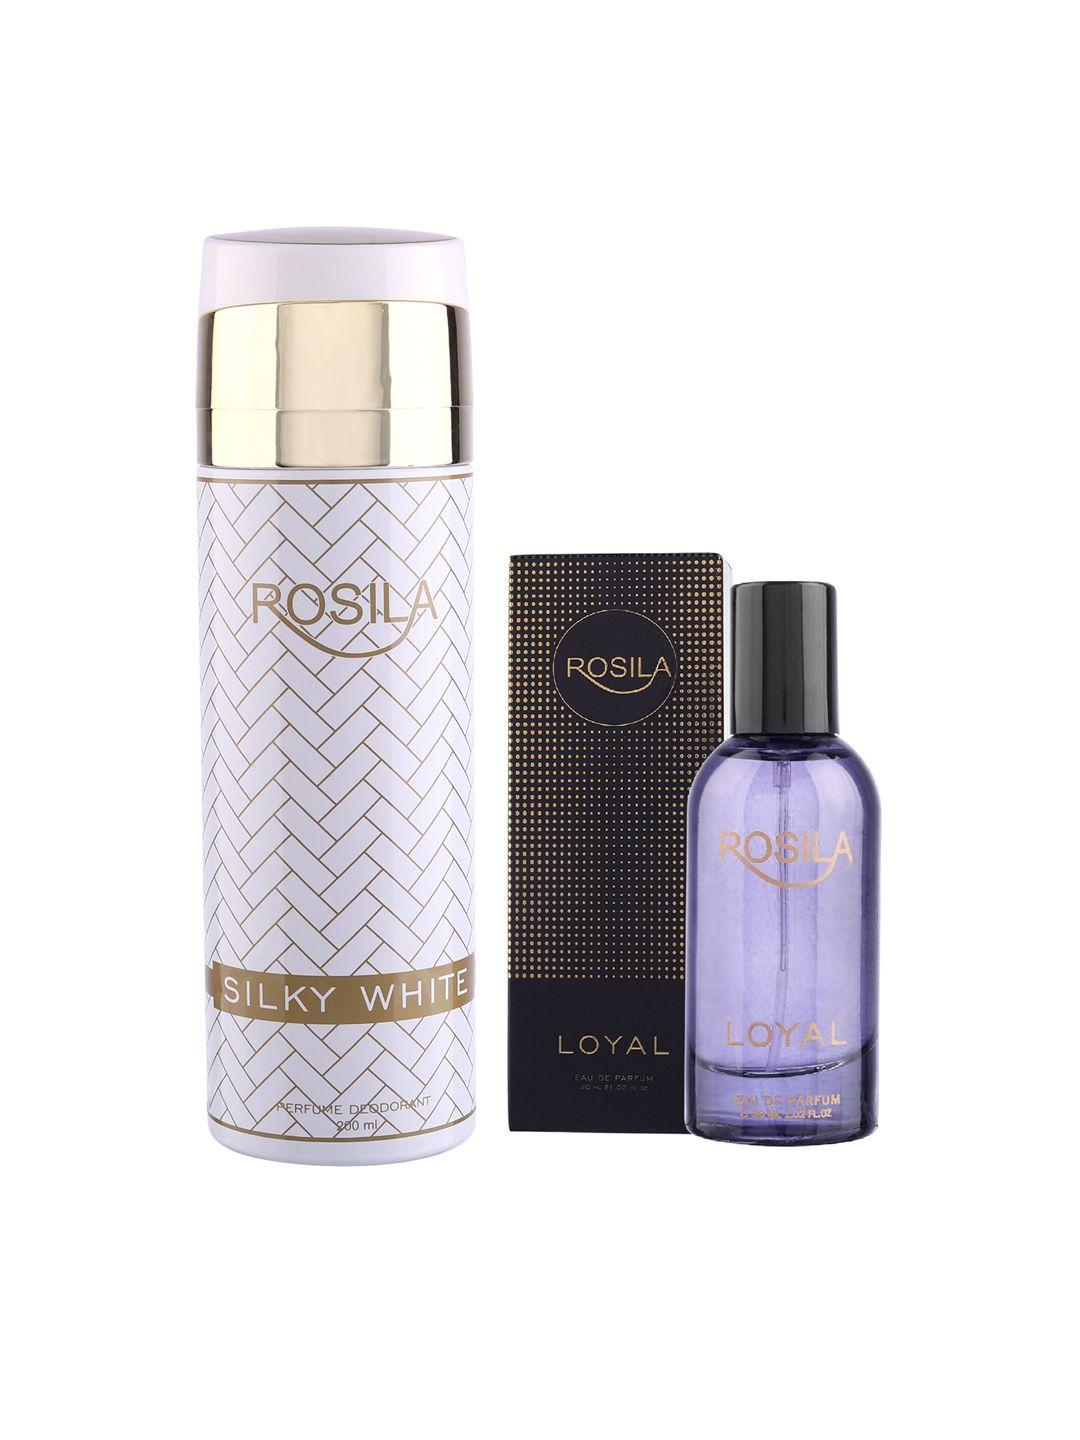 rosila set of silky white deodorant body spray 200ml & loyal eau de parfum 30ml